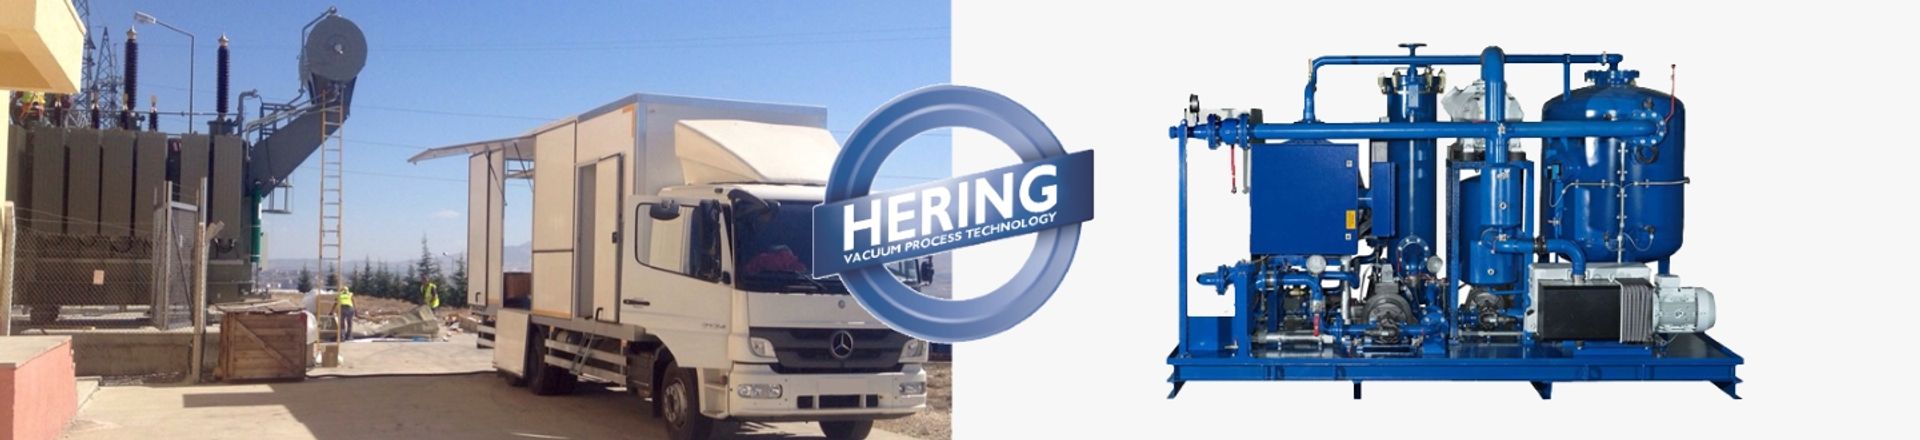 Hering-VPT GmbH